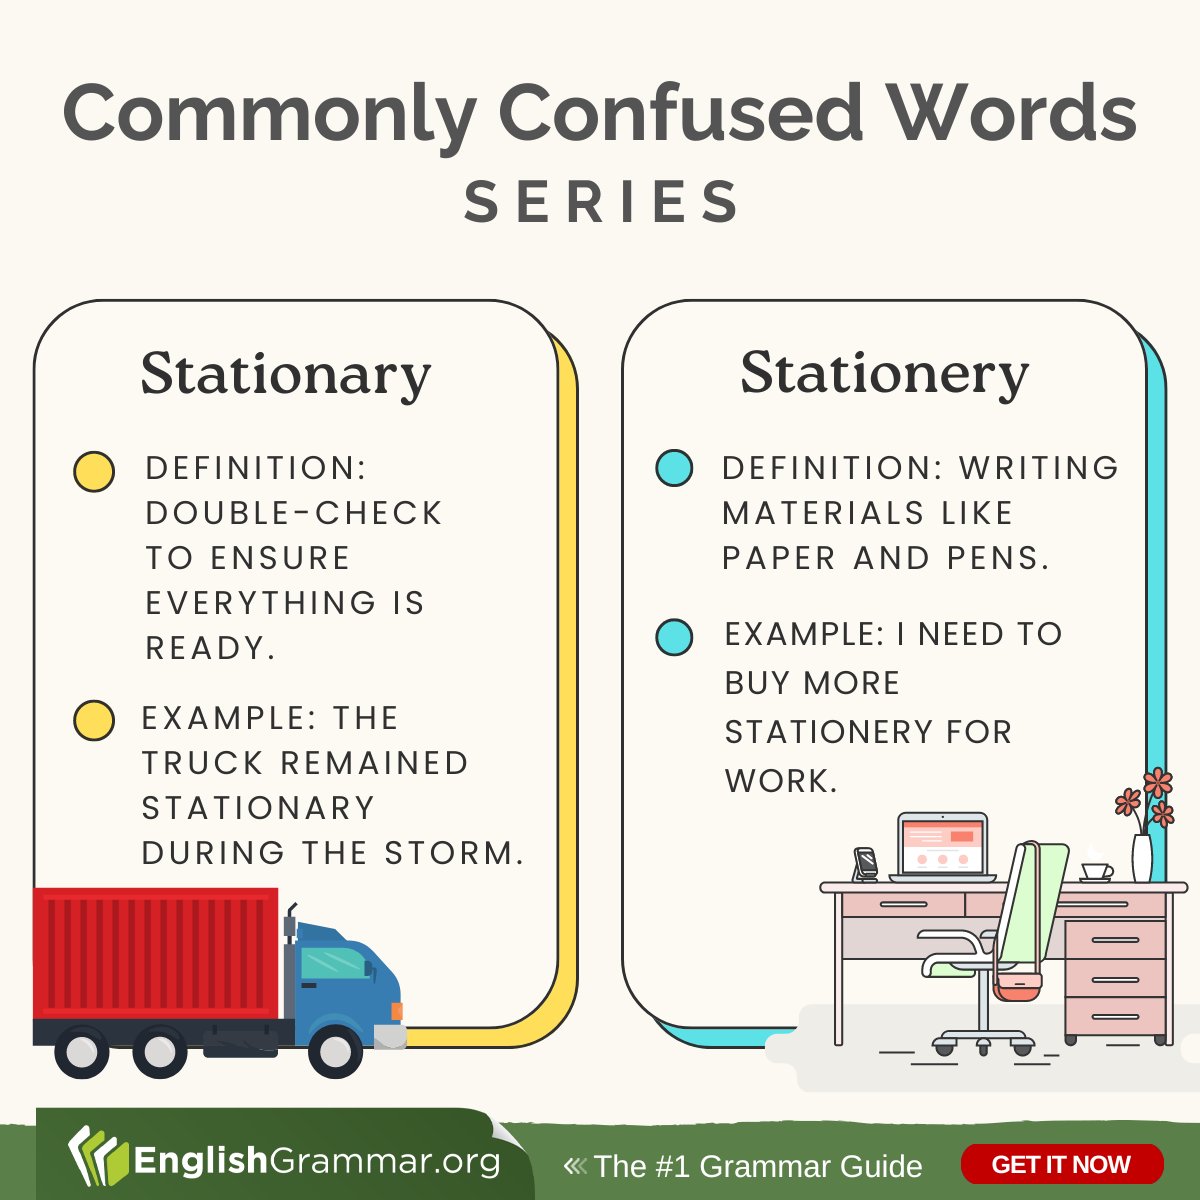 Stationary vs. Stationery

#vocabulary #amwriting #writing